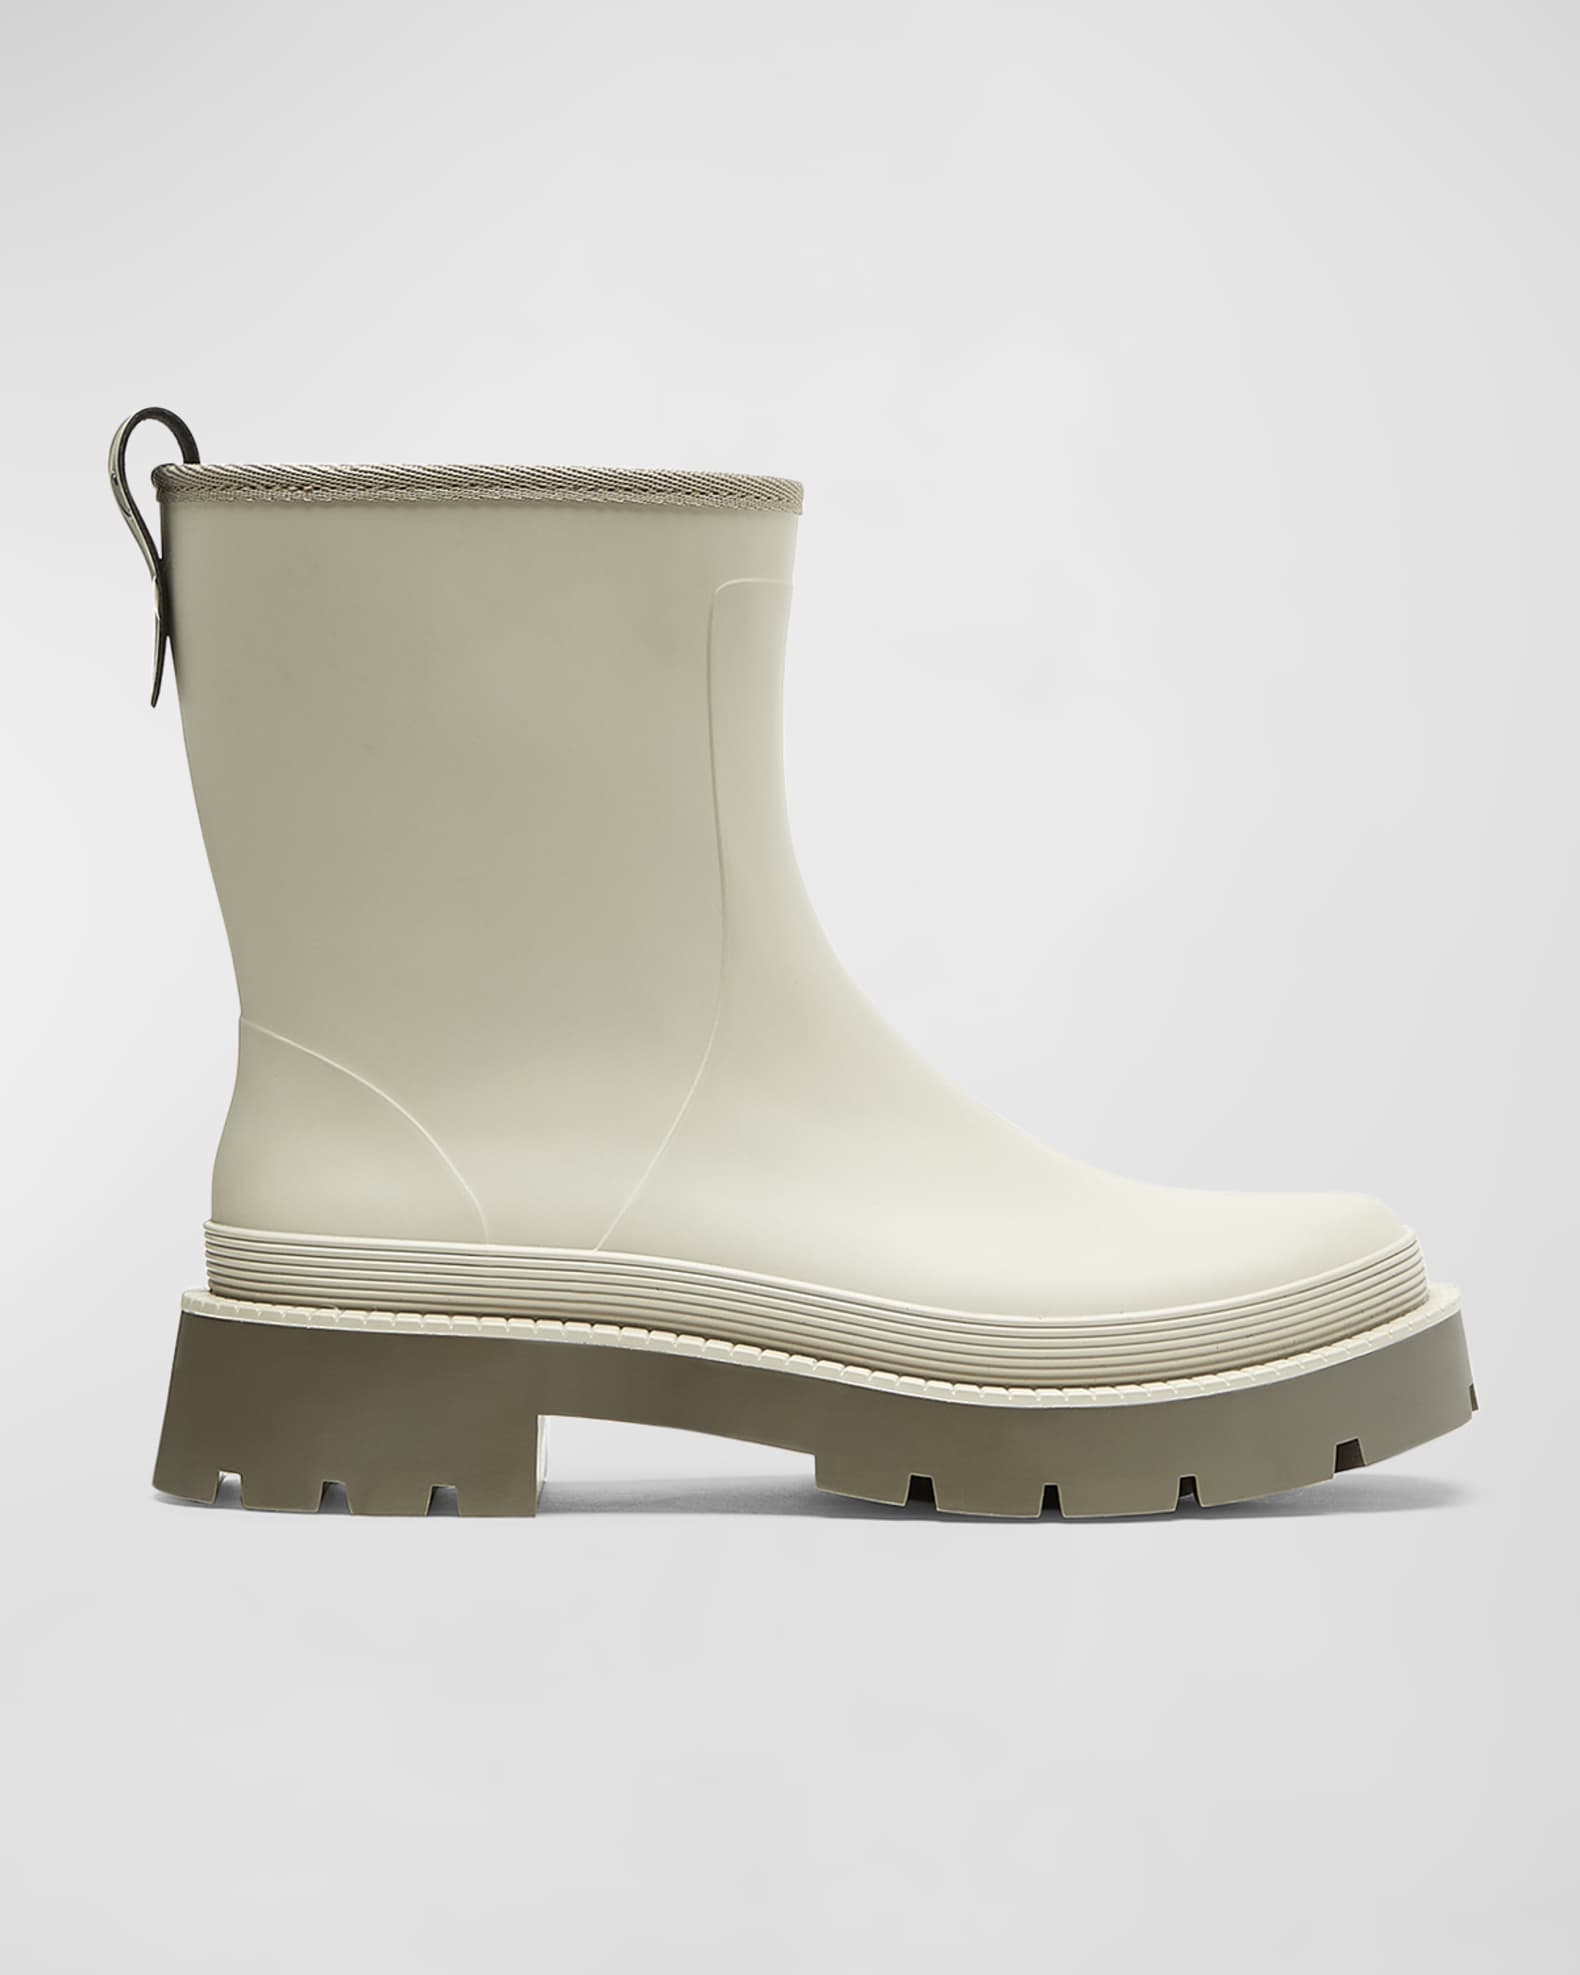 LOUIS VUITTON DROPS FLAT HALF BOOT  Comparison to HUNTER Rain Boots 